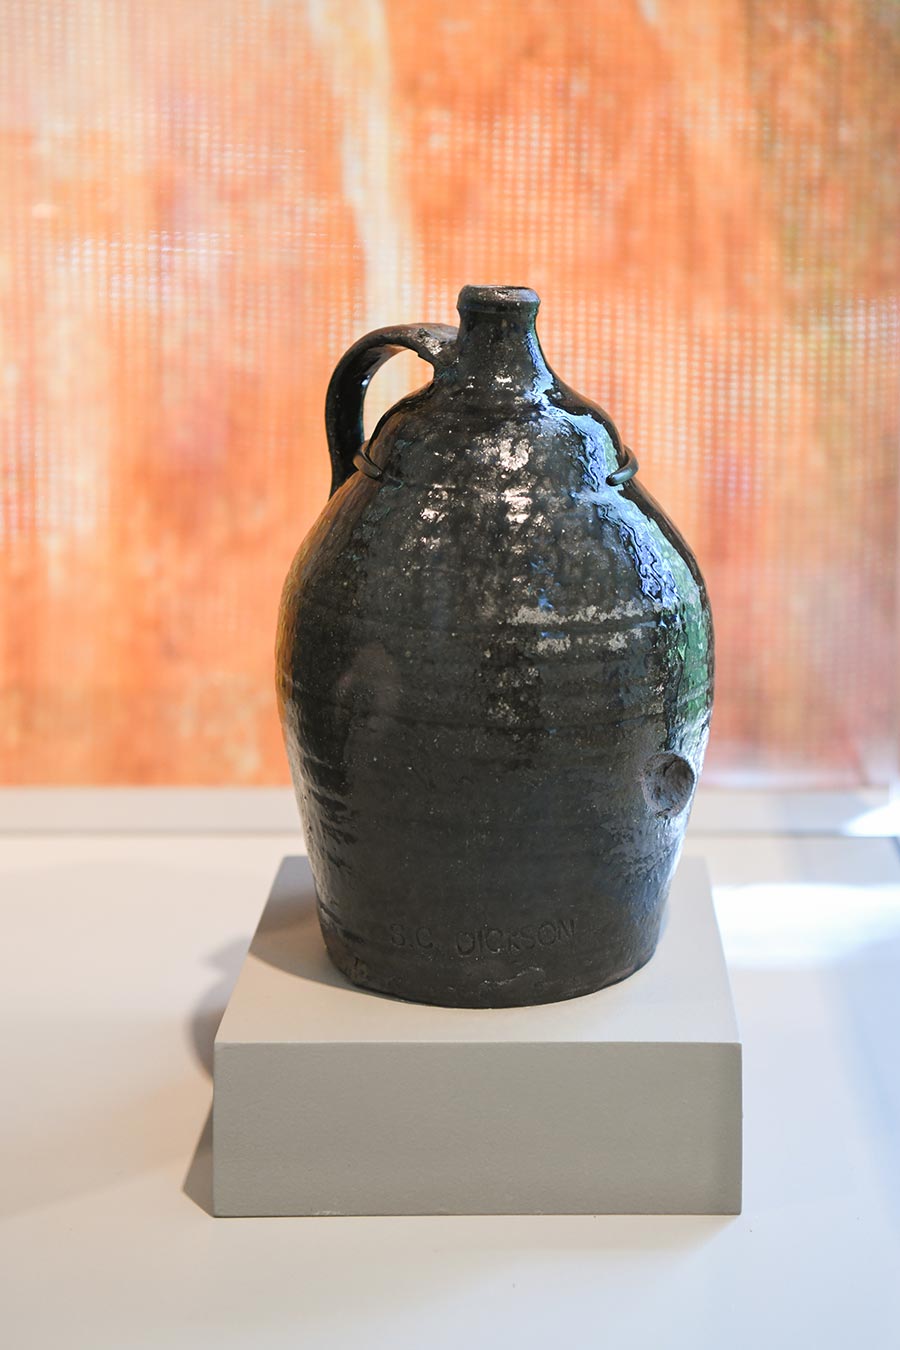 A glazed stoneware jug on a small riser.